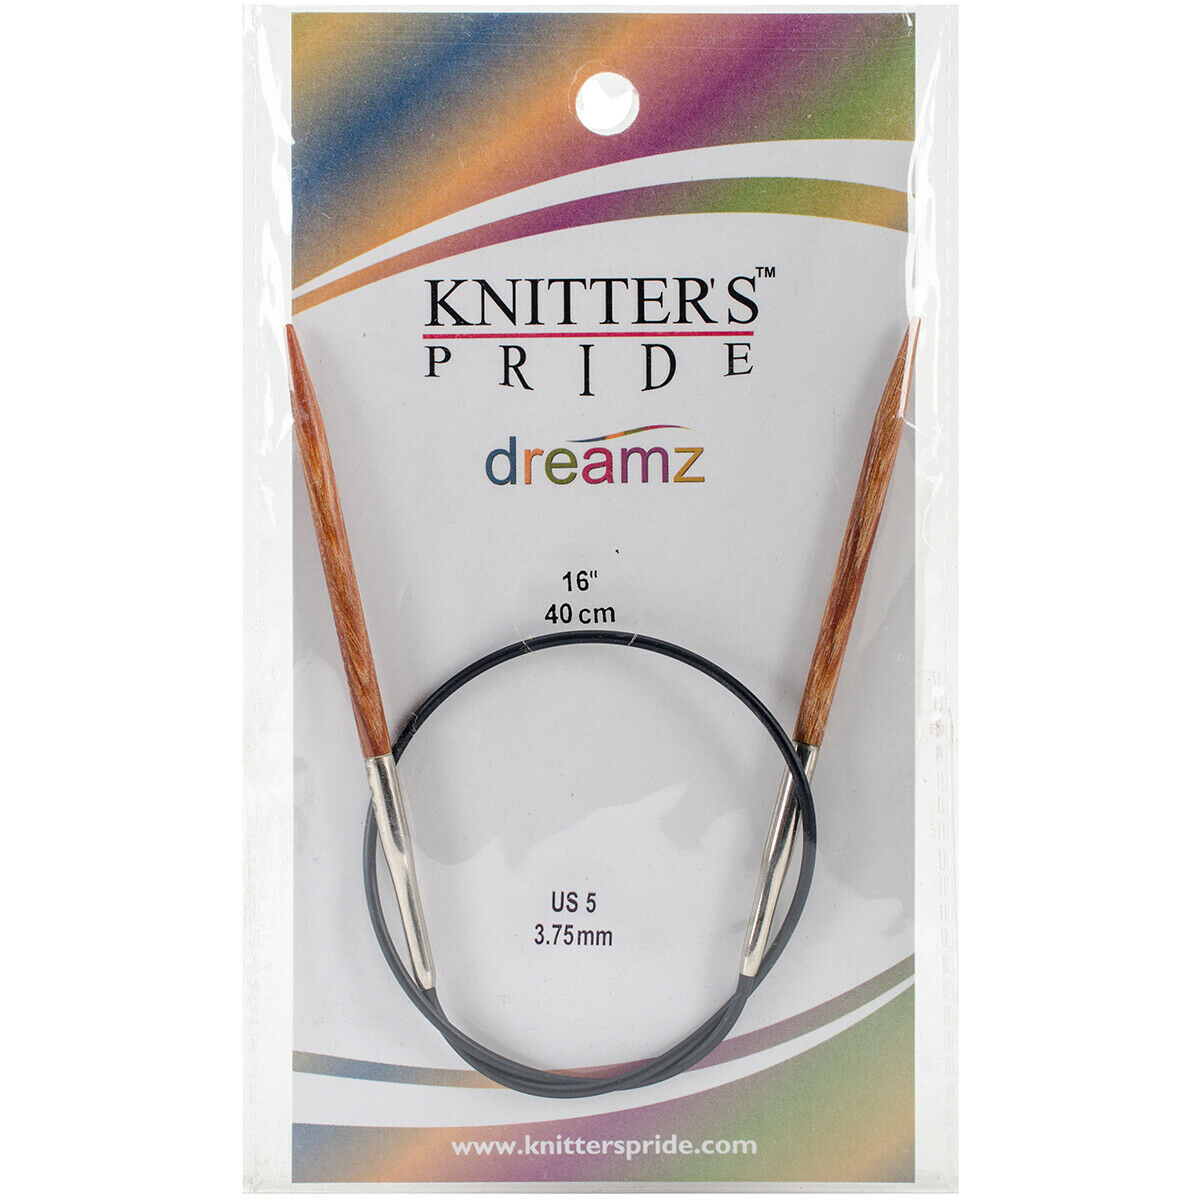 Knitter's Pride-dreamz Fixed Circular Needles 16"-size 5/3.75mm, Kp200208